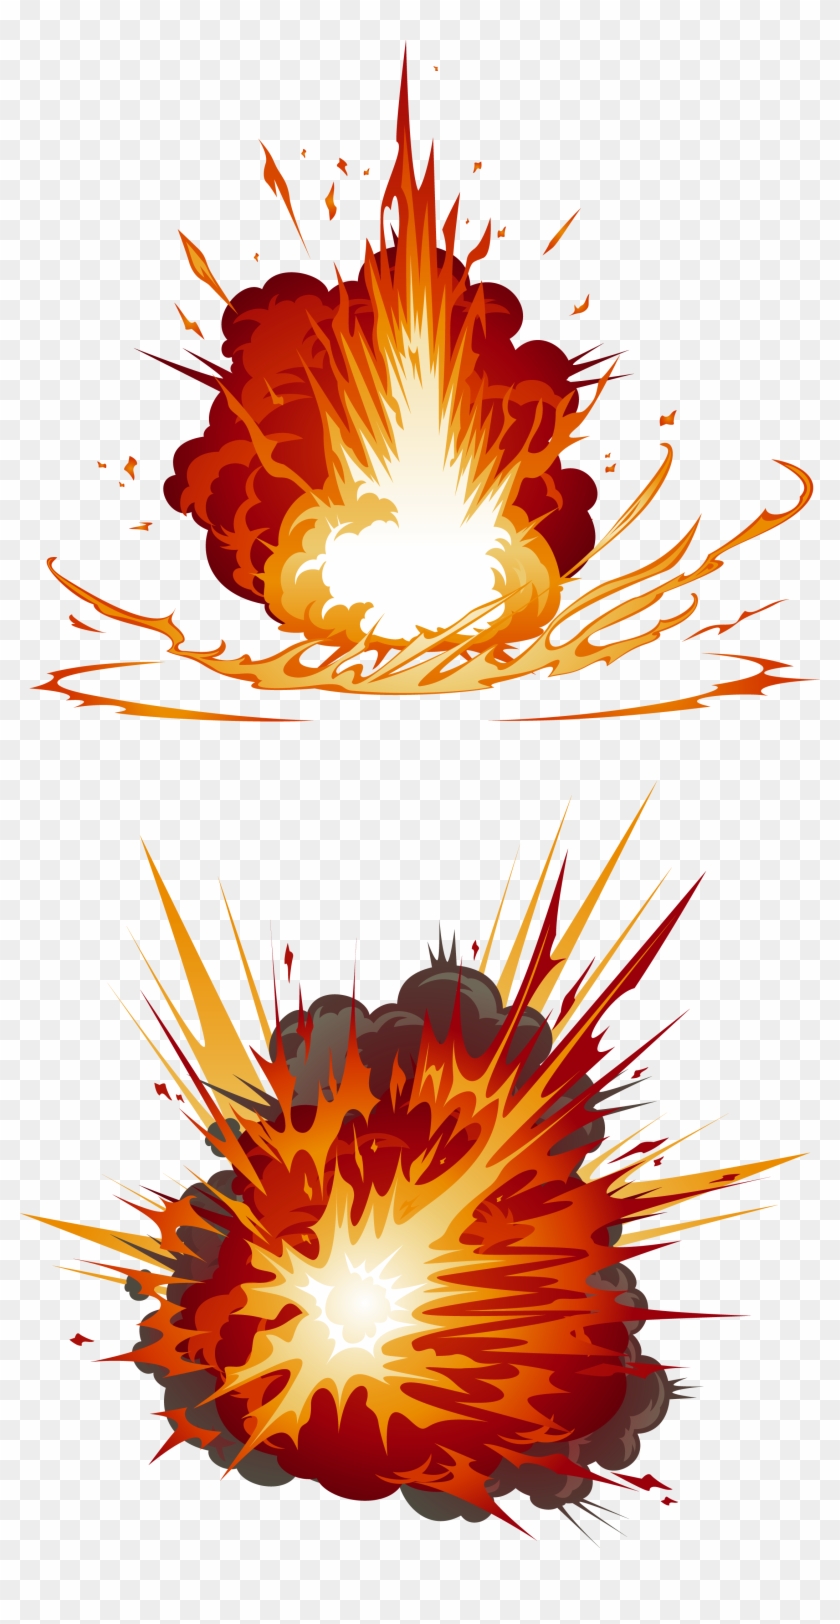 My Explosion Firecracker - Explosion #805643